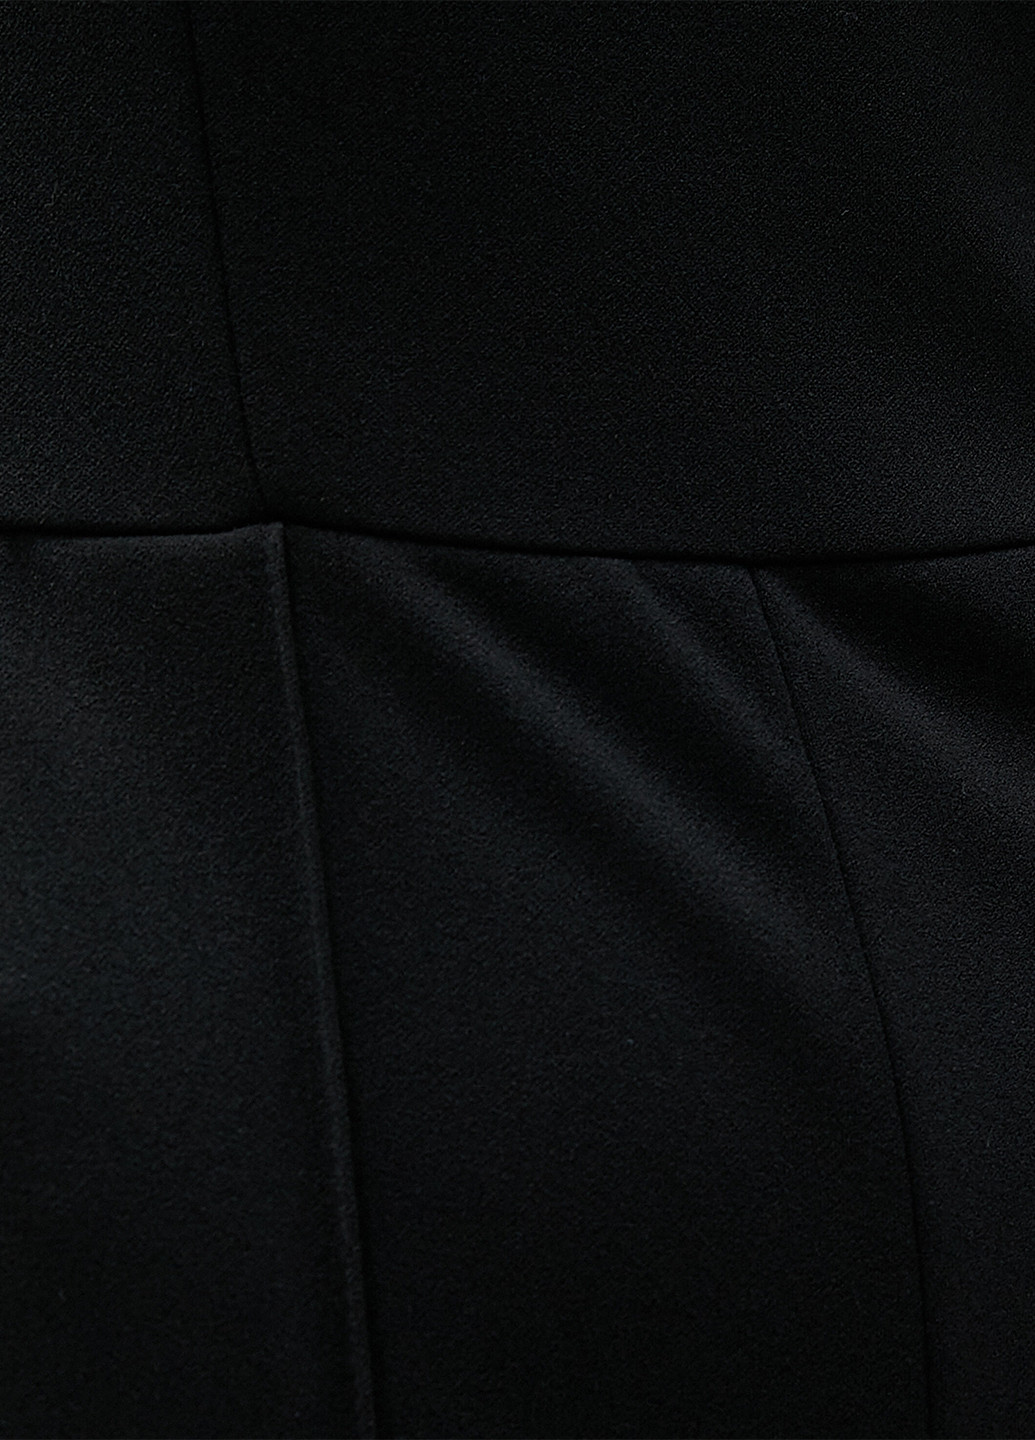 Комбинезон KOTON комбинезон-брюки новогодний чёрный кэжуал полиэстер